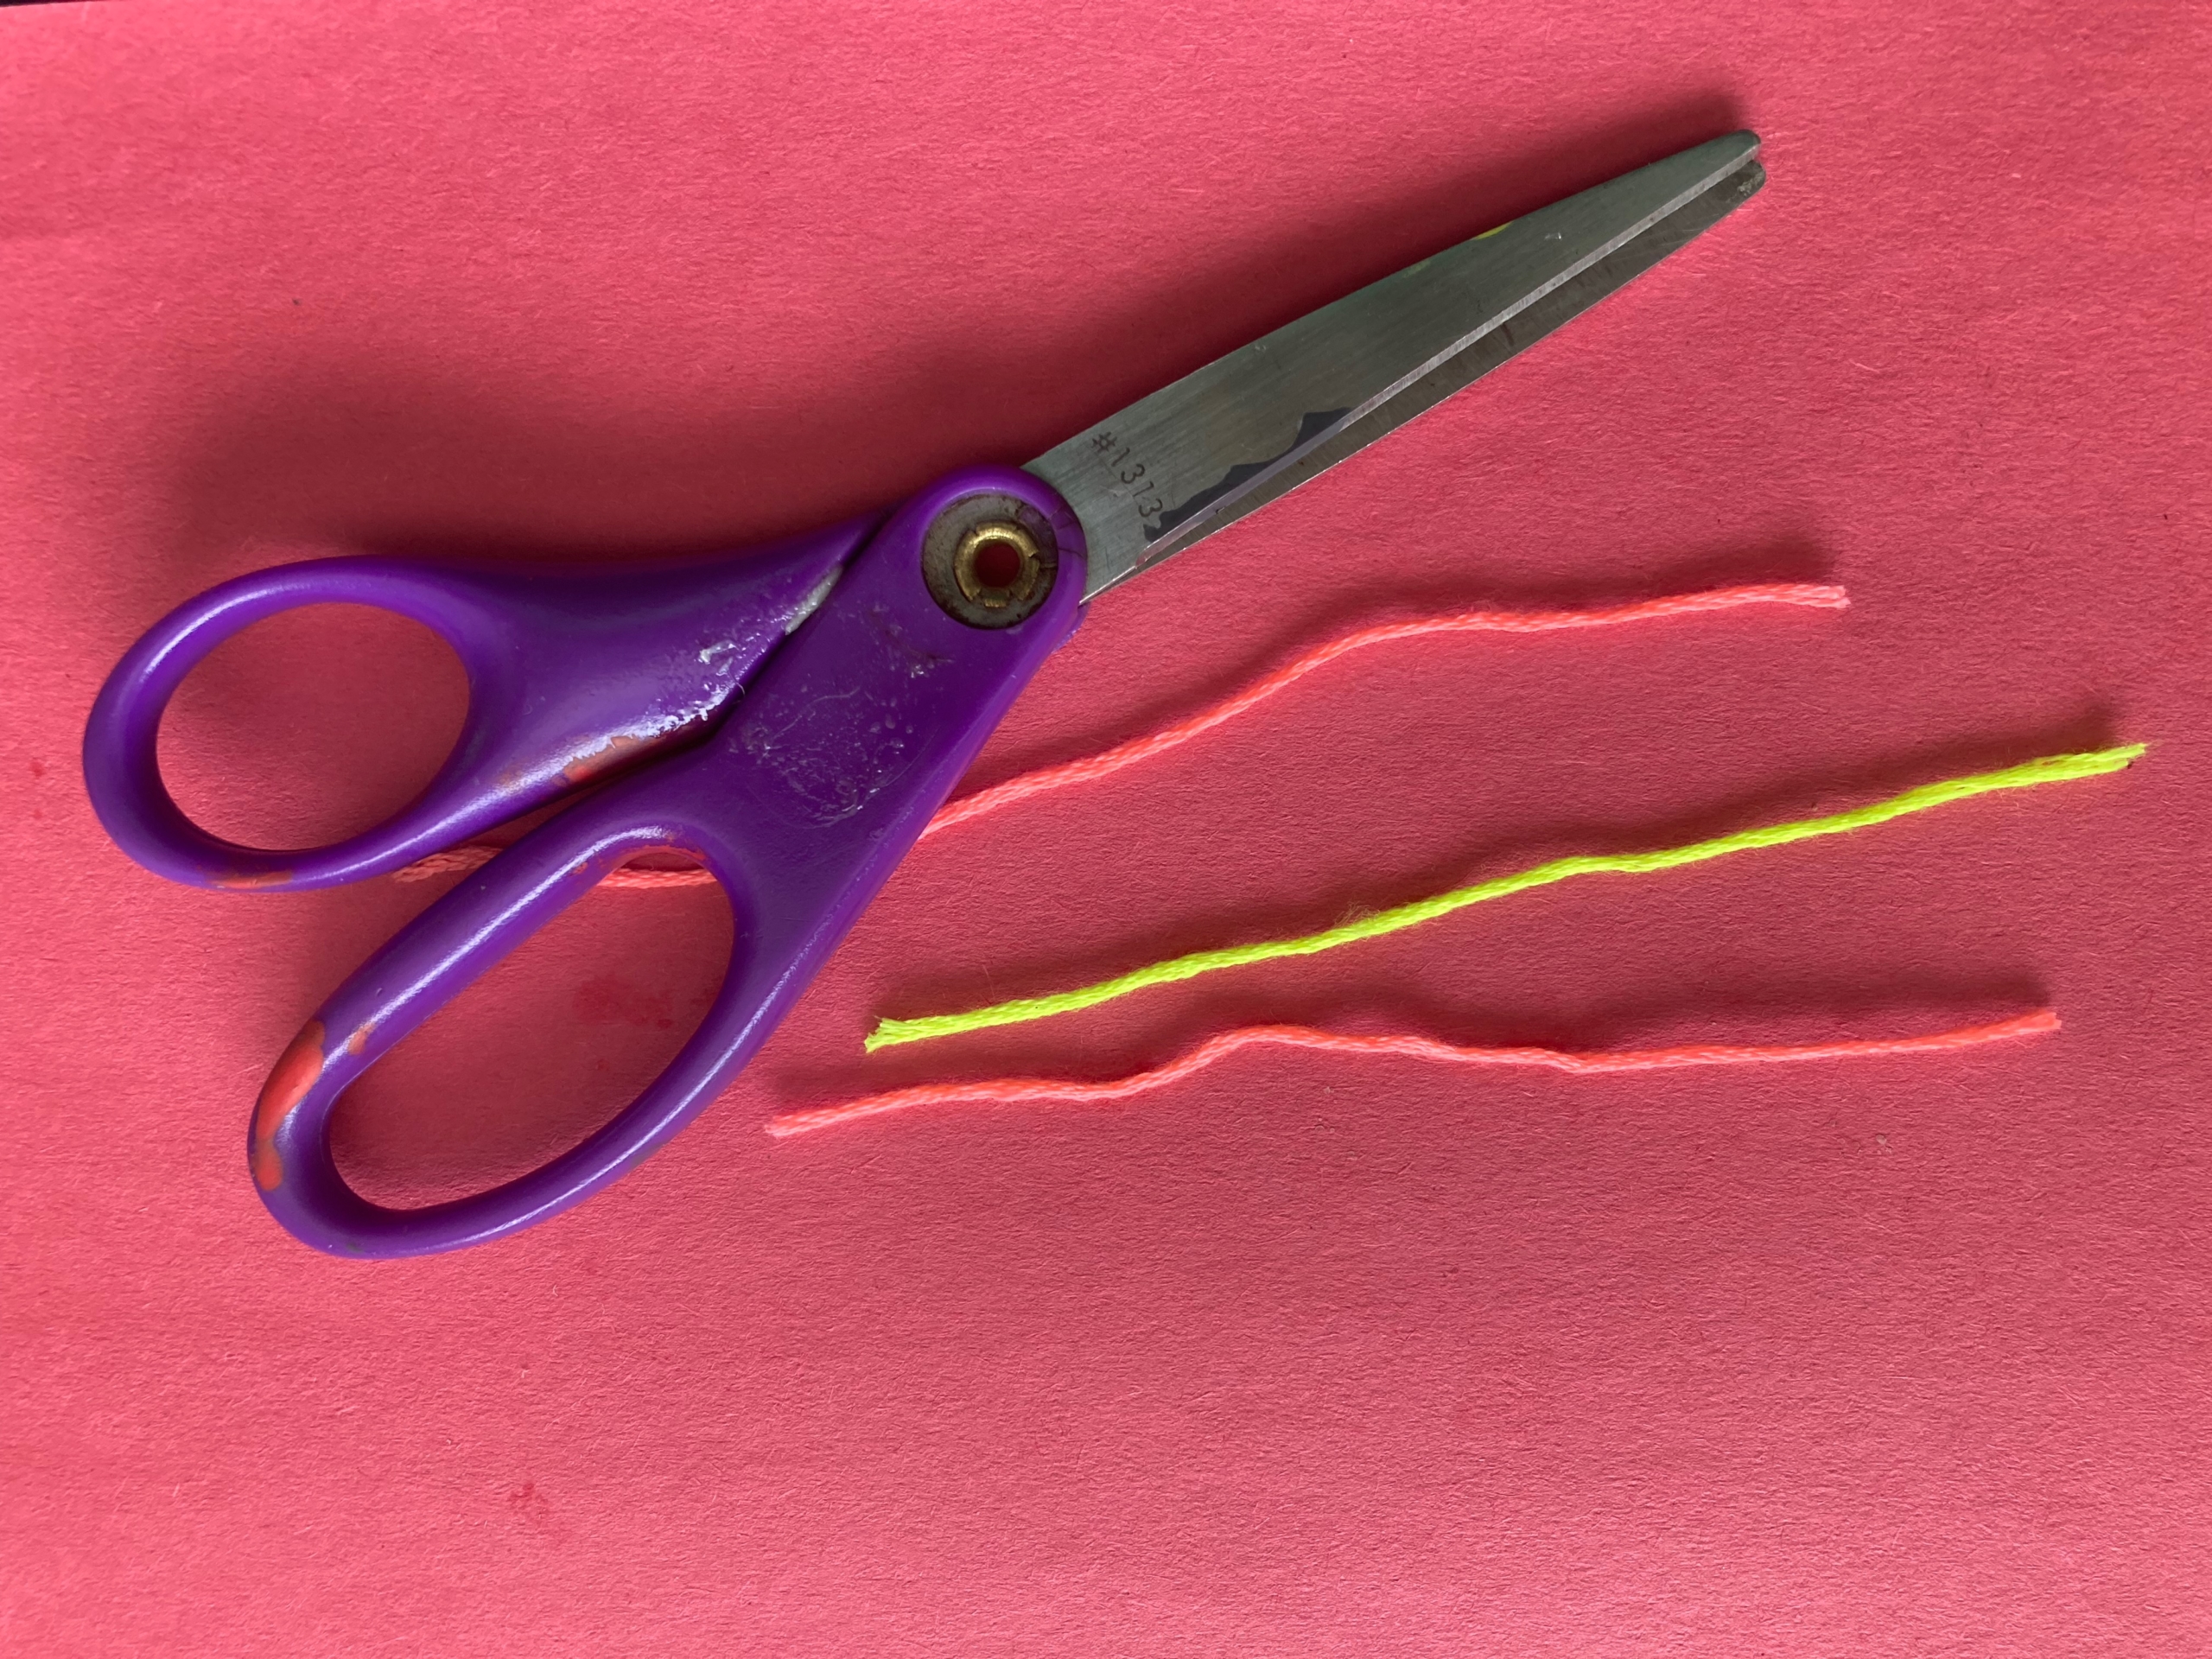 scissors next to three pieces of string